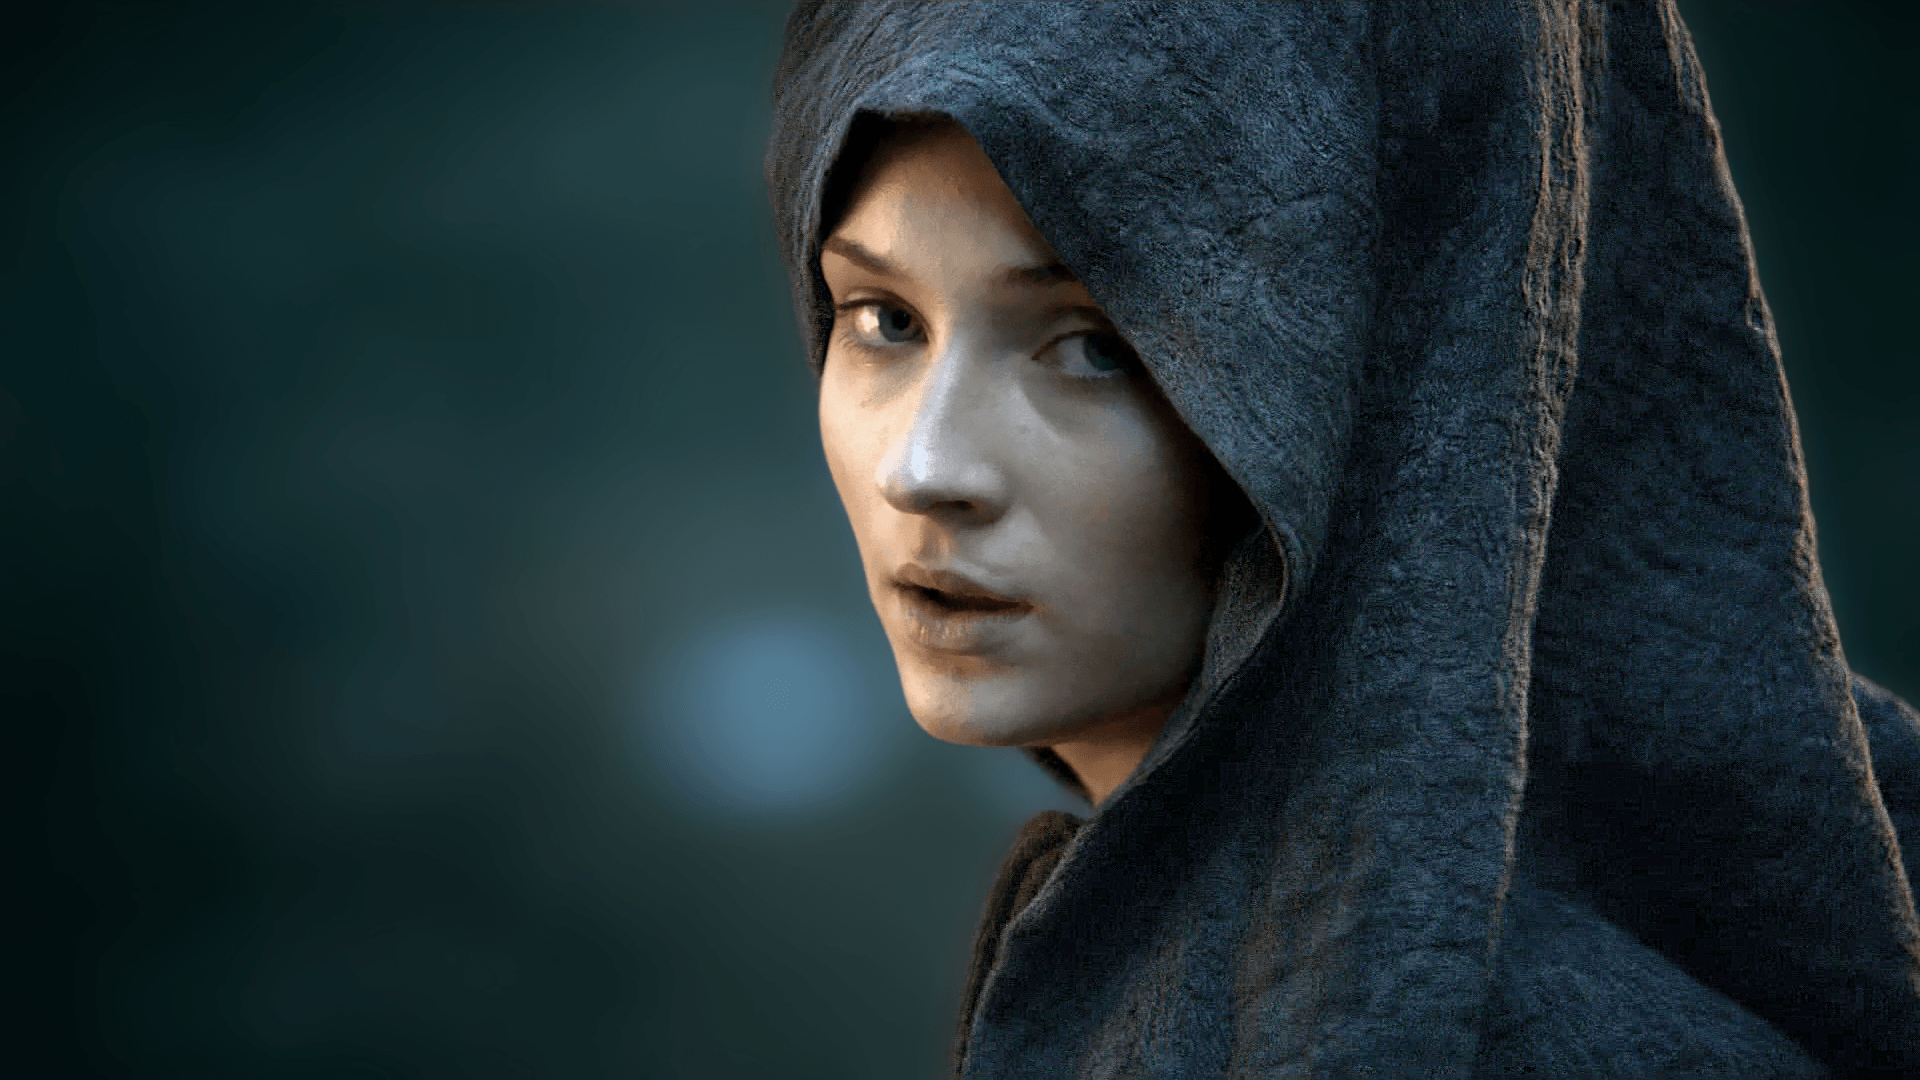 Wallpaper Sophie Turner, Sansa Stark, Game of Thrones, Nose, Hair,  Background - Download Free Image